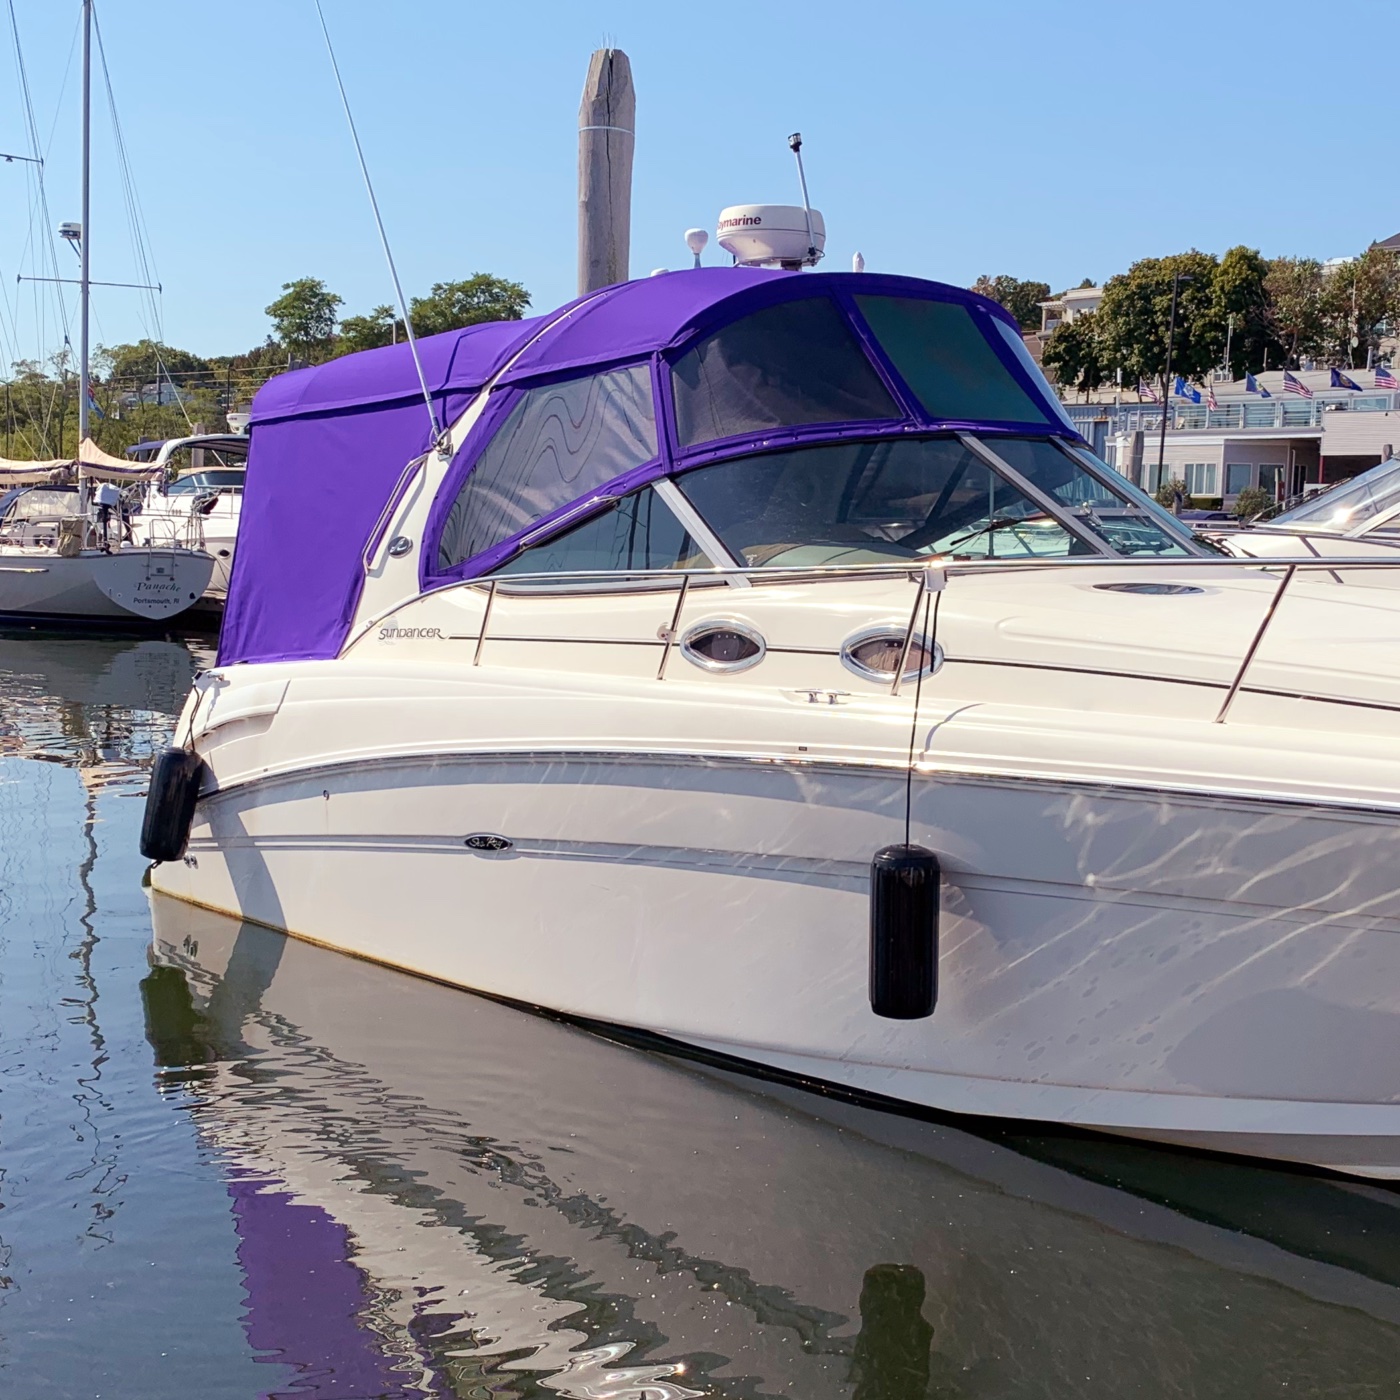 A distinctive purple cruiser enclosure